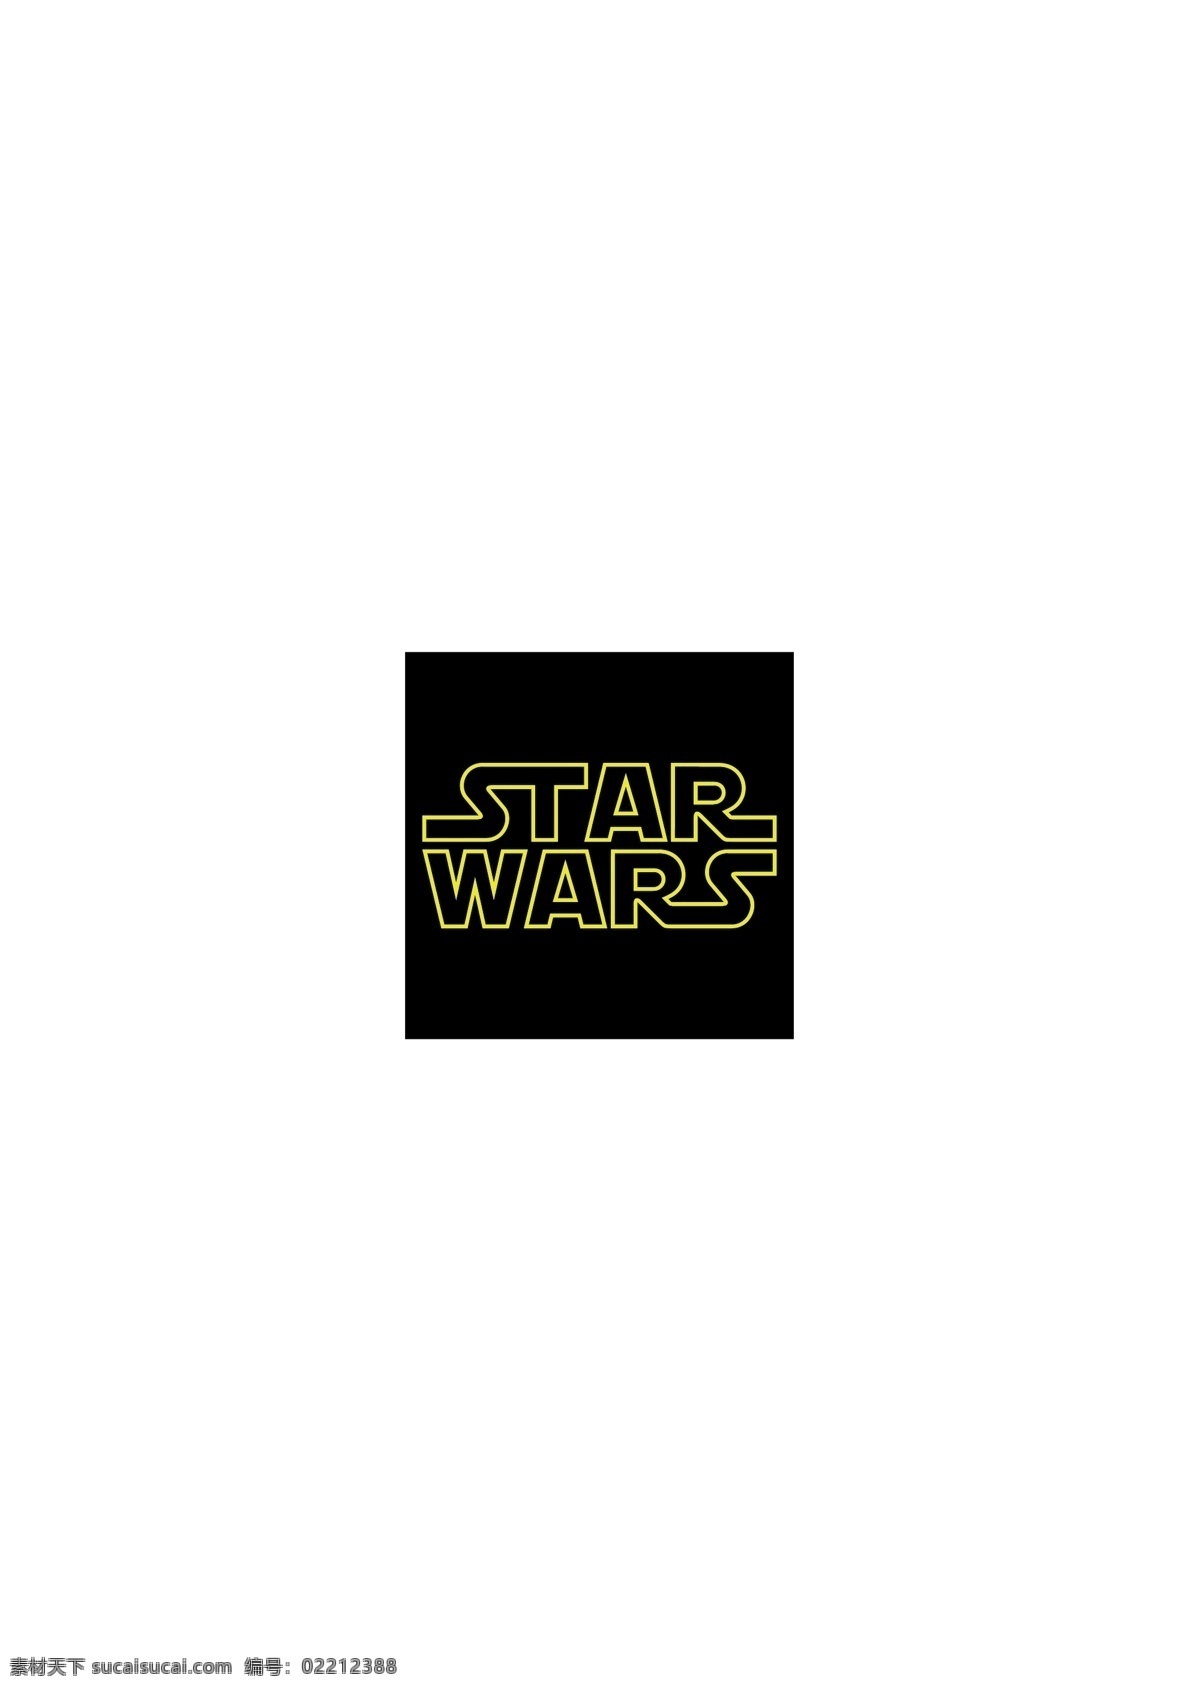 logo大全 logo 设计欣赏 商业矢量 矢量下载 starwars1 好莱坞 电影 标志 标志设计 欣赏 网页矢量 矢量图 其他矢量图